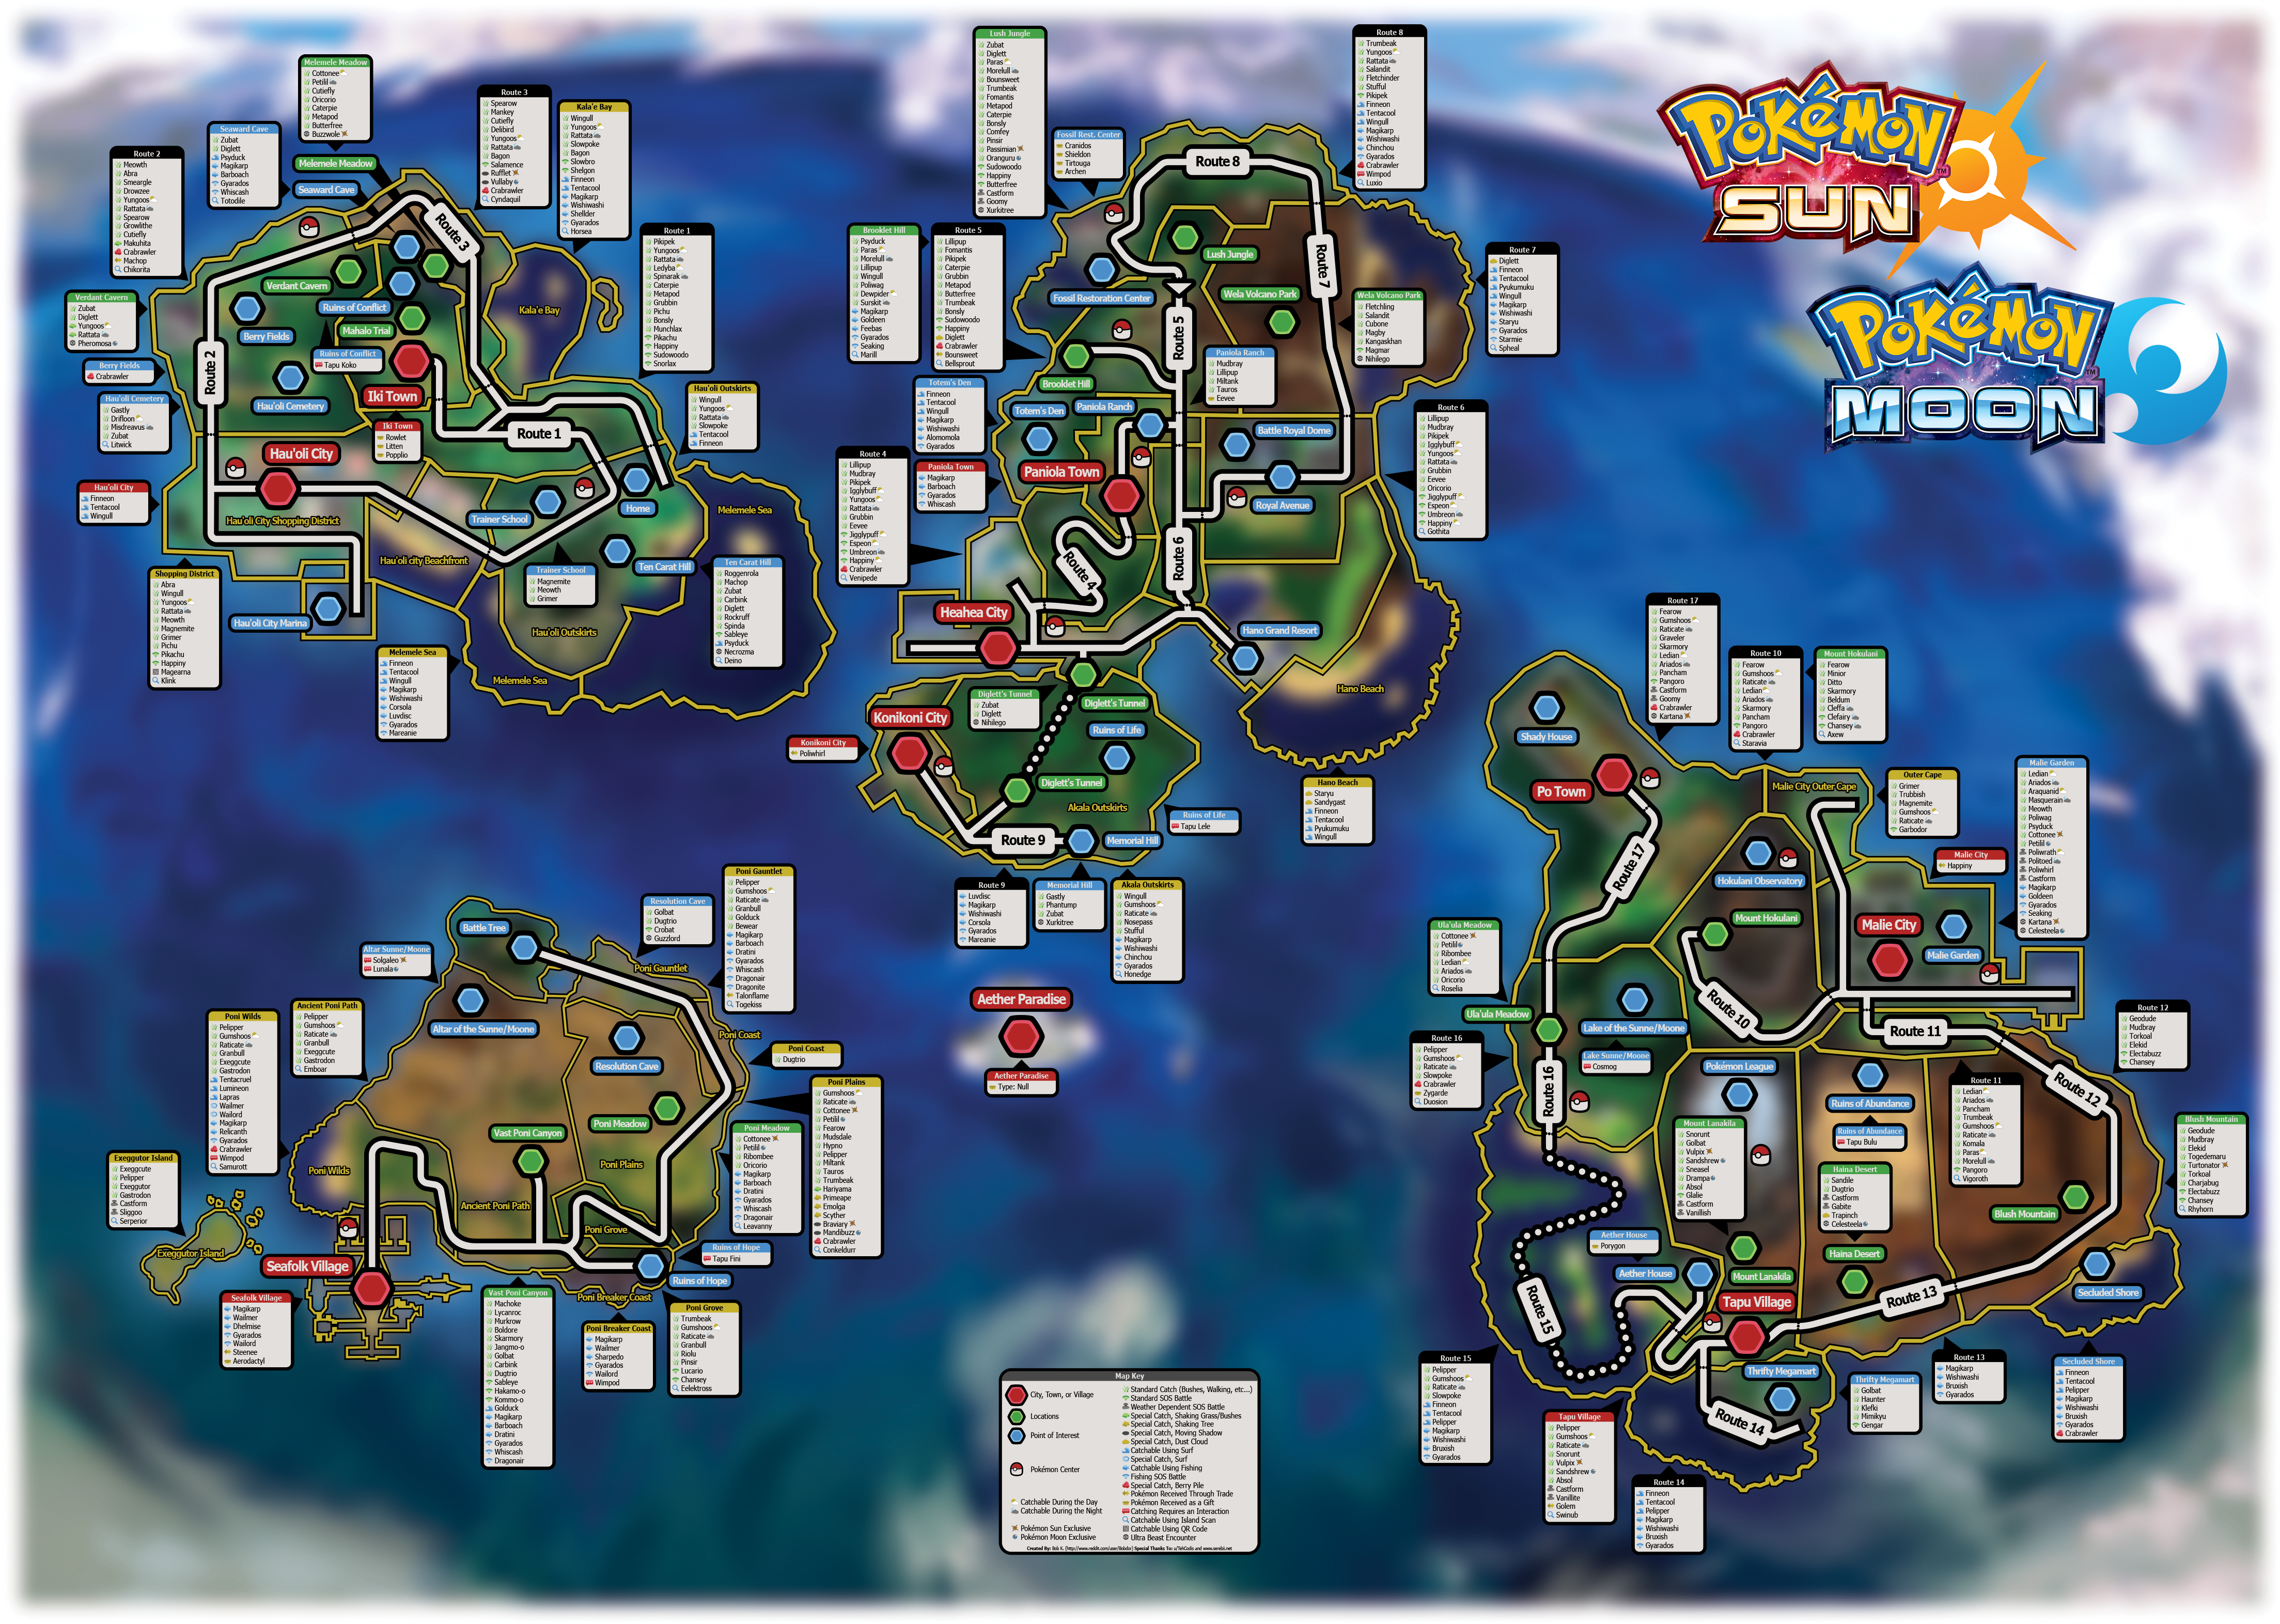 Guide] Alolan Pokémon Trade Locations in Pokémon: Lets Go - Miketendo64